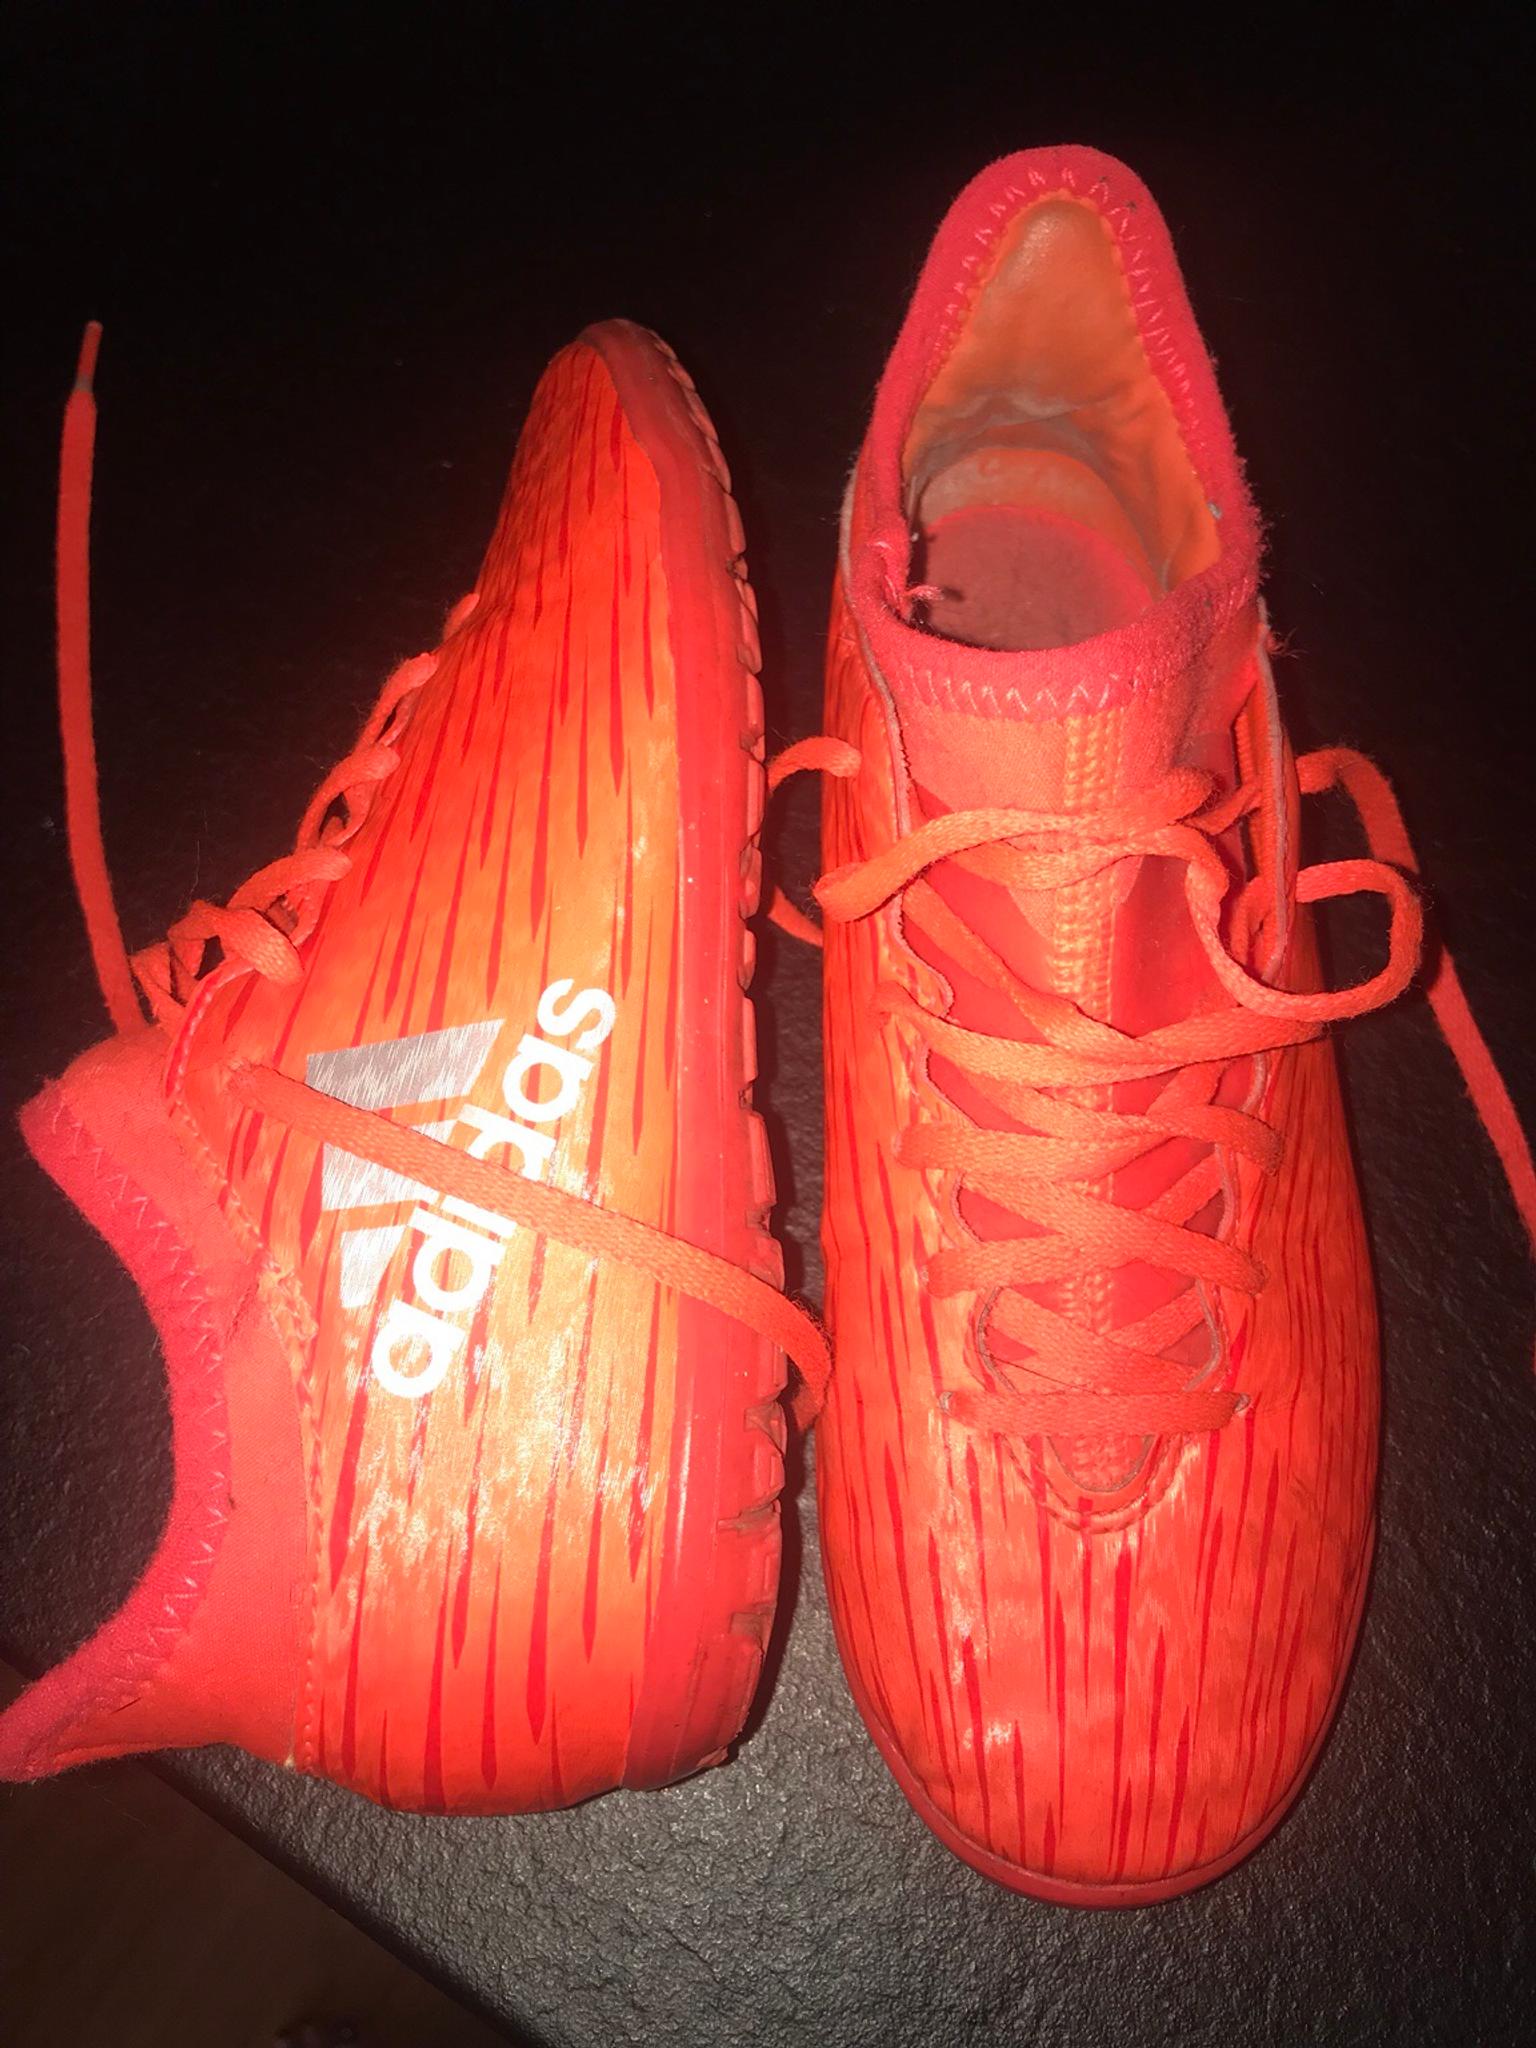 adidas techfit shoes football